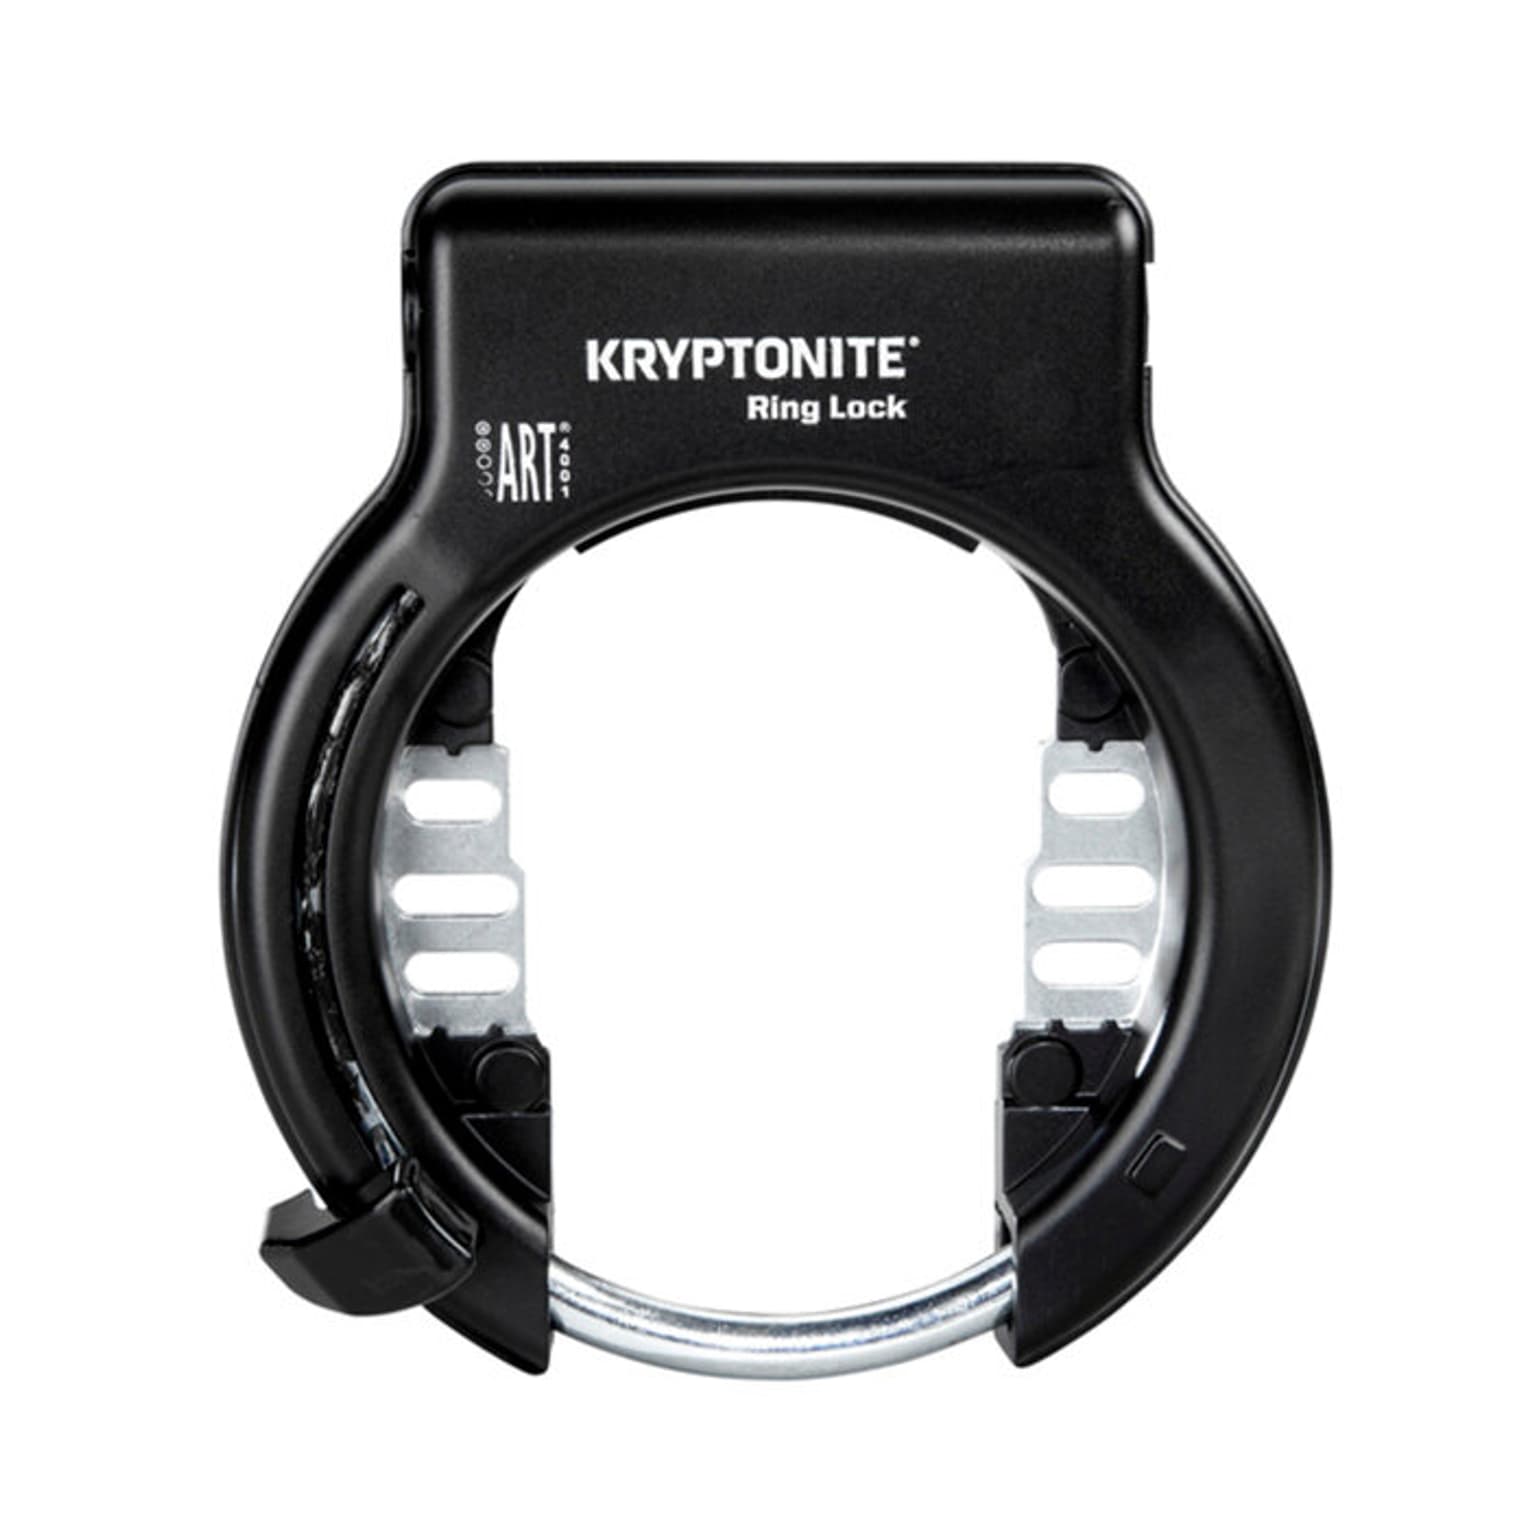 Kryptonite Kryptonite Ring Lock Lucchetto per bicicletta 1